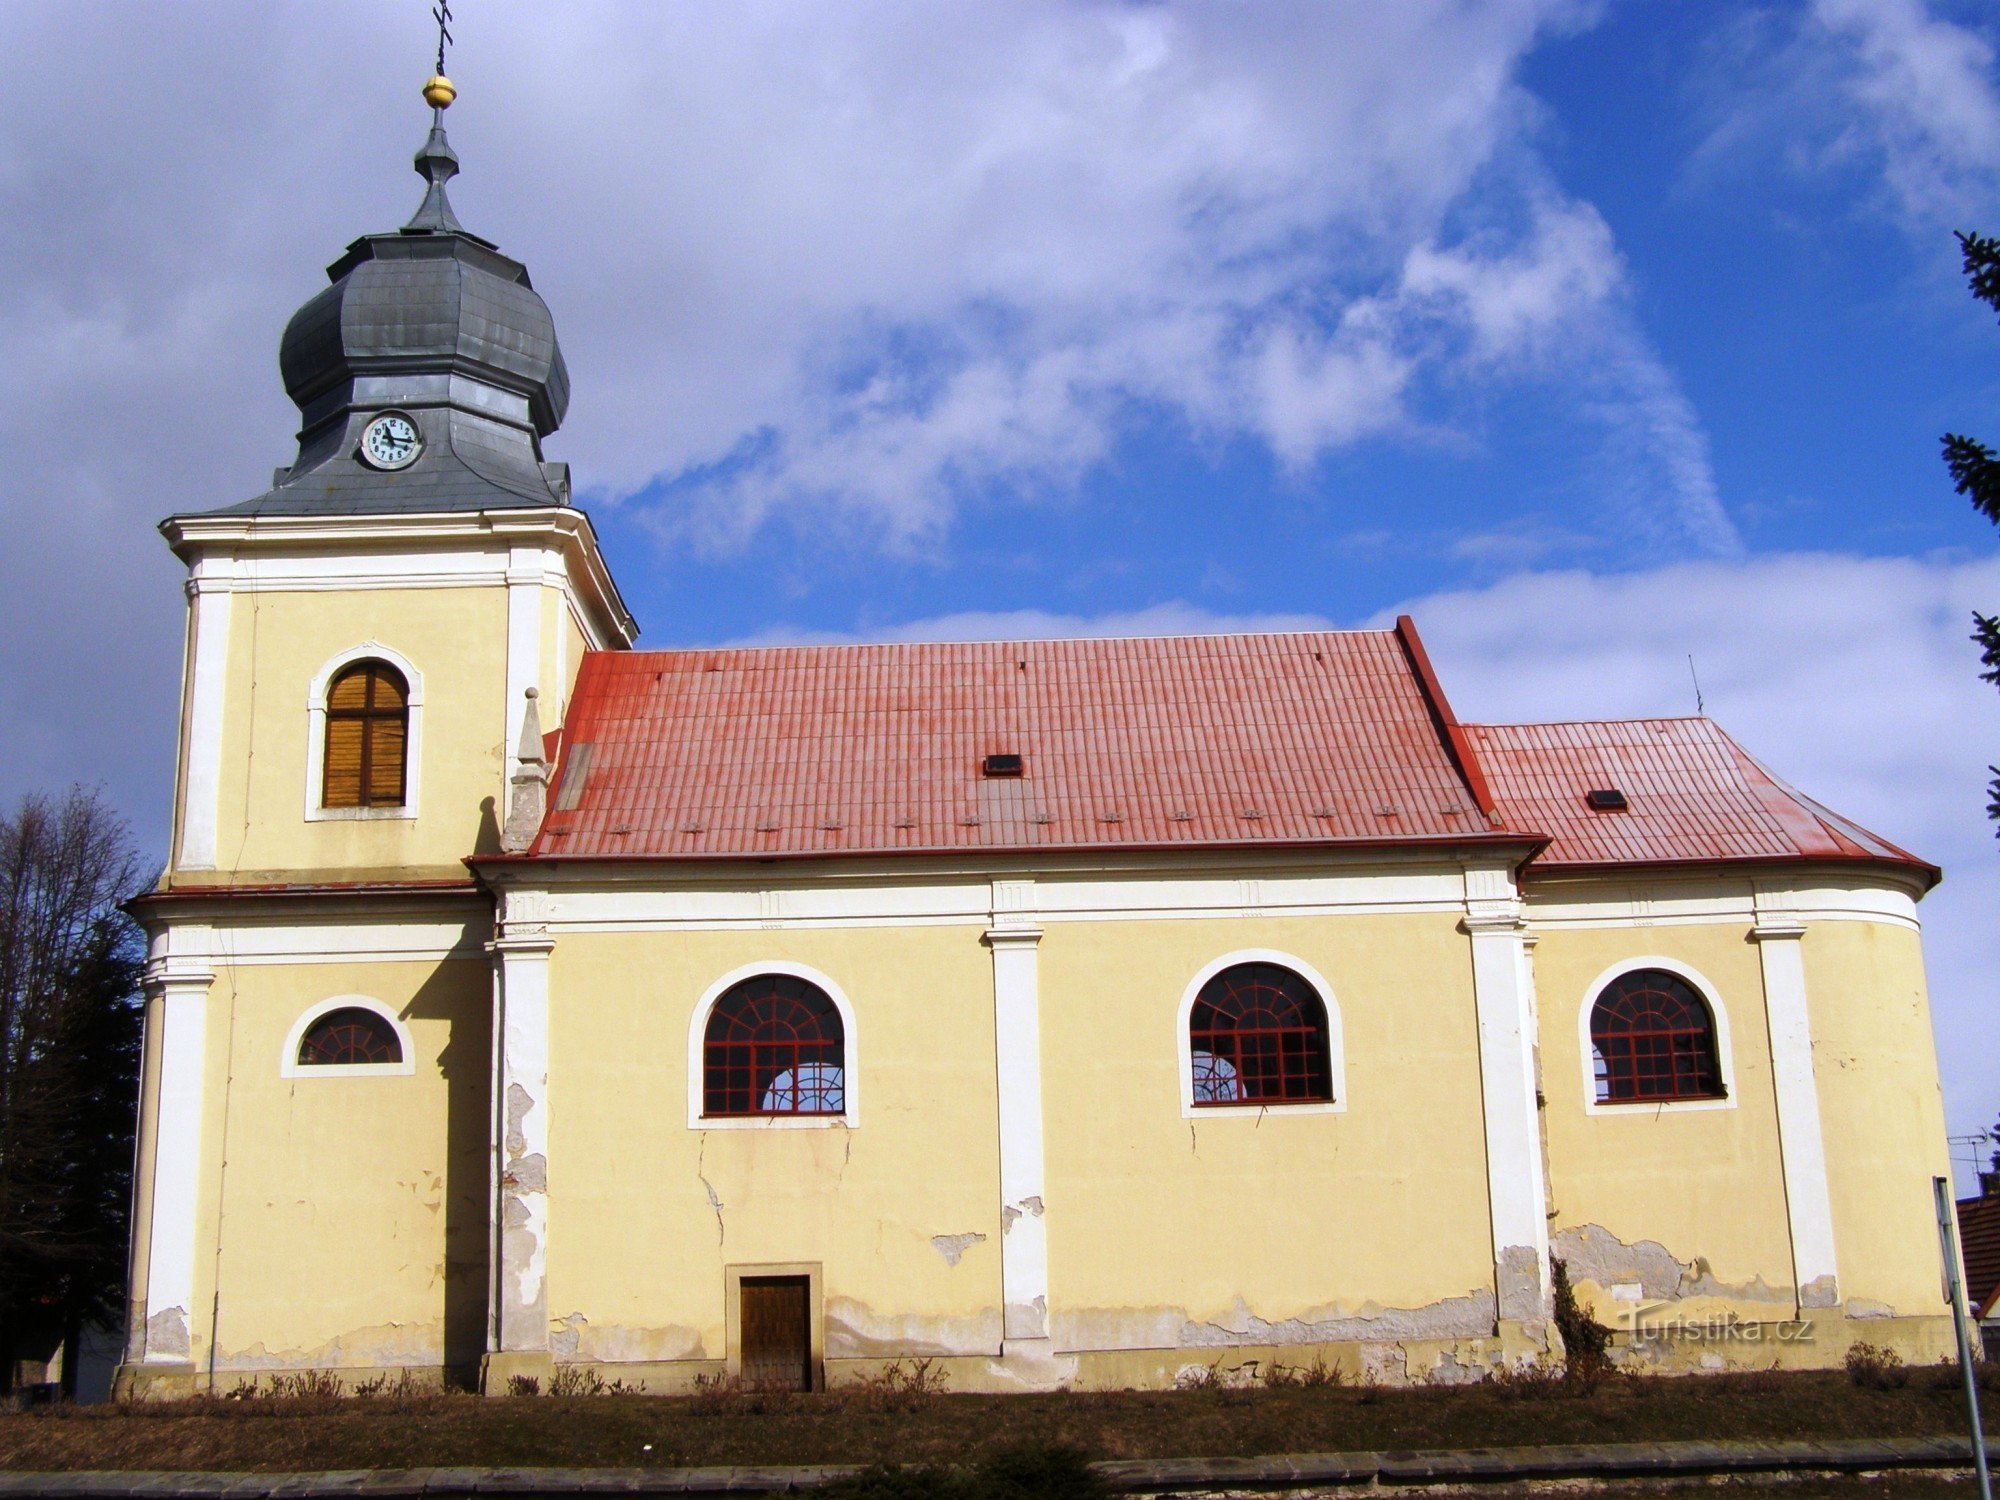 Běrunice - Church of the Nativity of the Virgin Mary